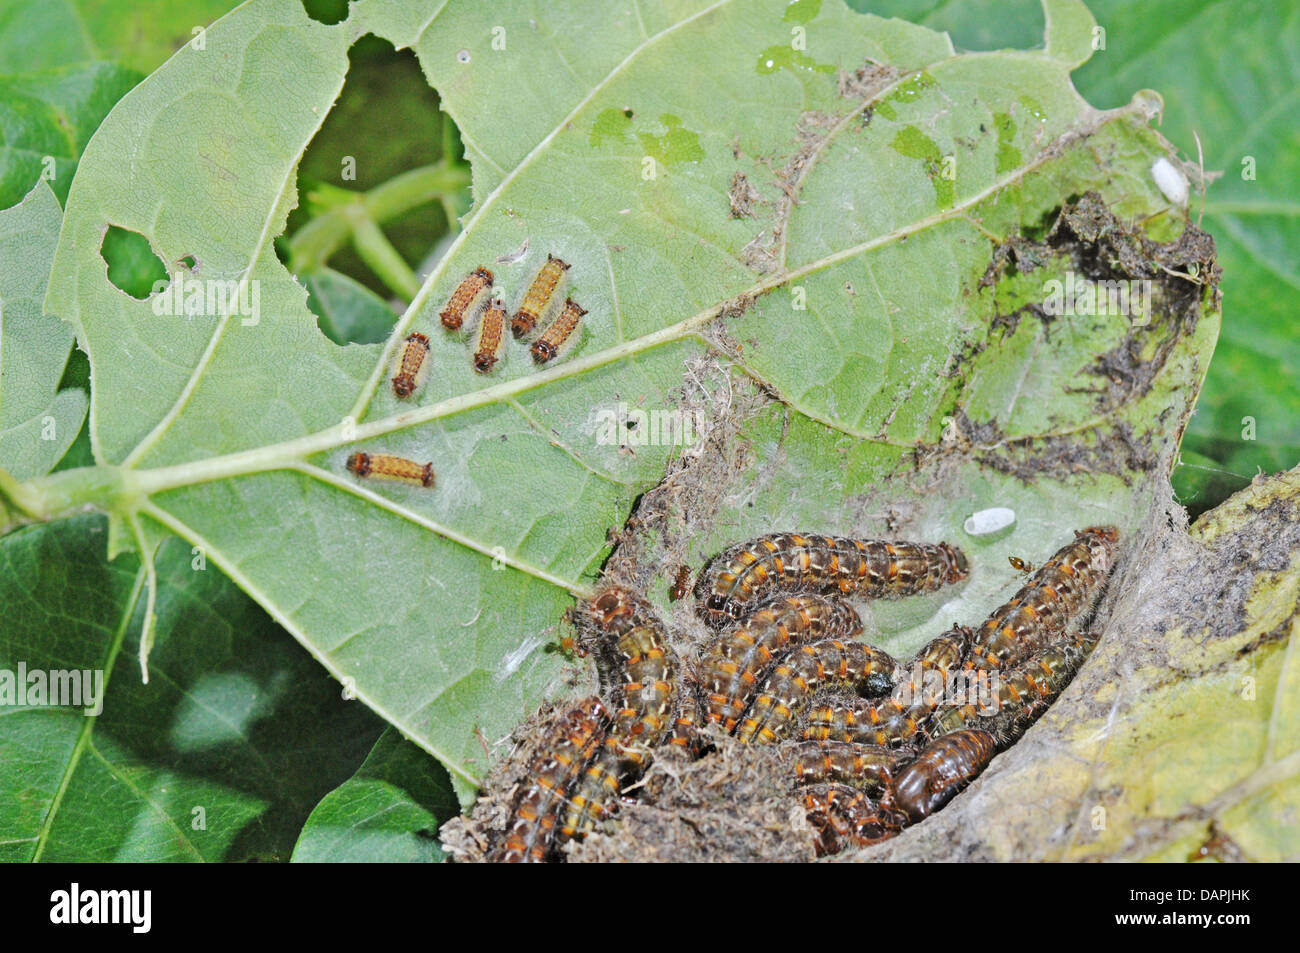 Agricultural pest. Larvae feeding on a leaf Stock Photo